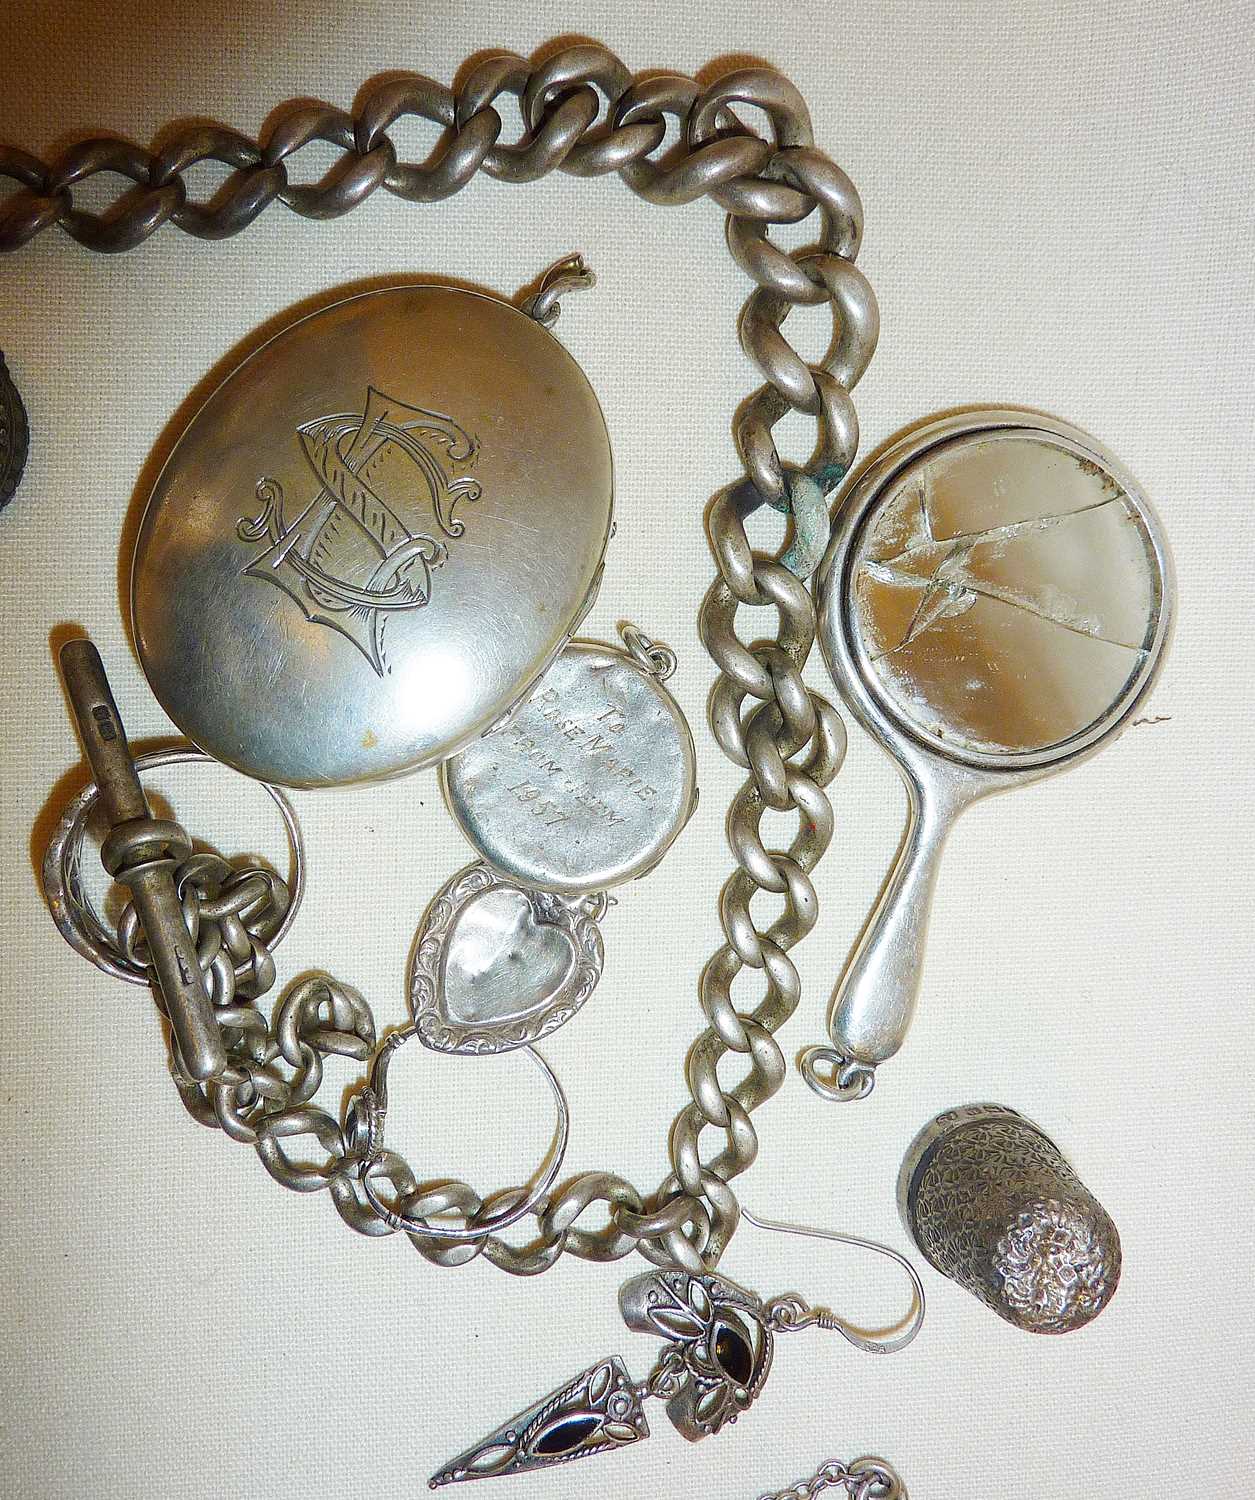 Silver jewellery, some antique, inc. an albert watch chain & compass fob (missing loop) - Bild 2 aus 4